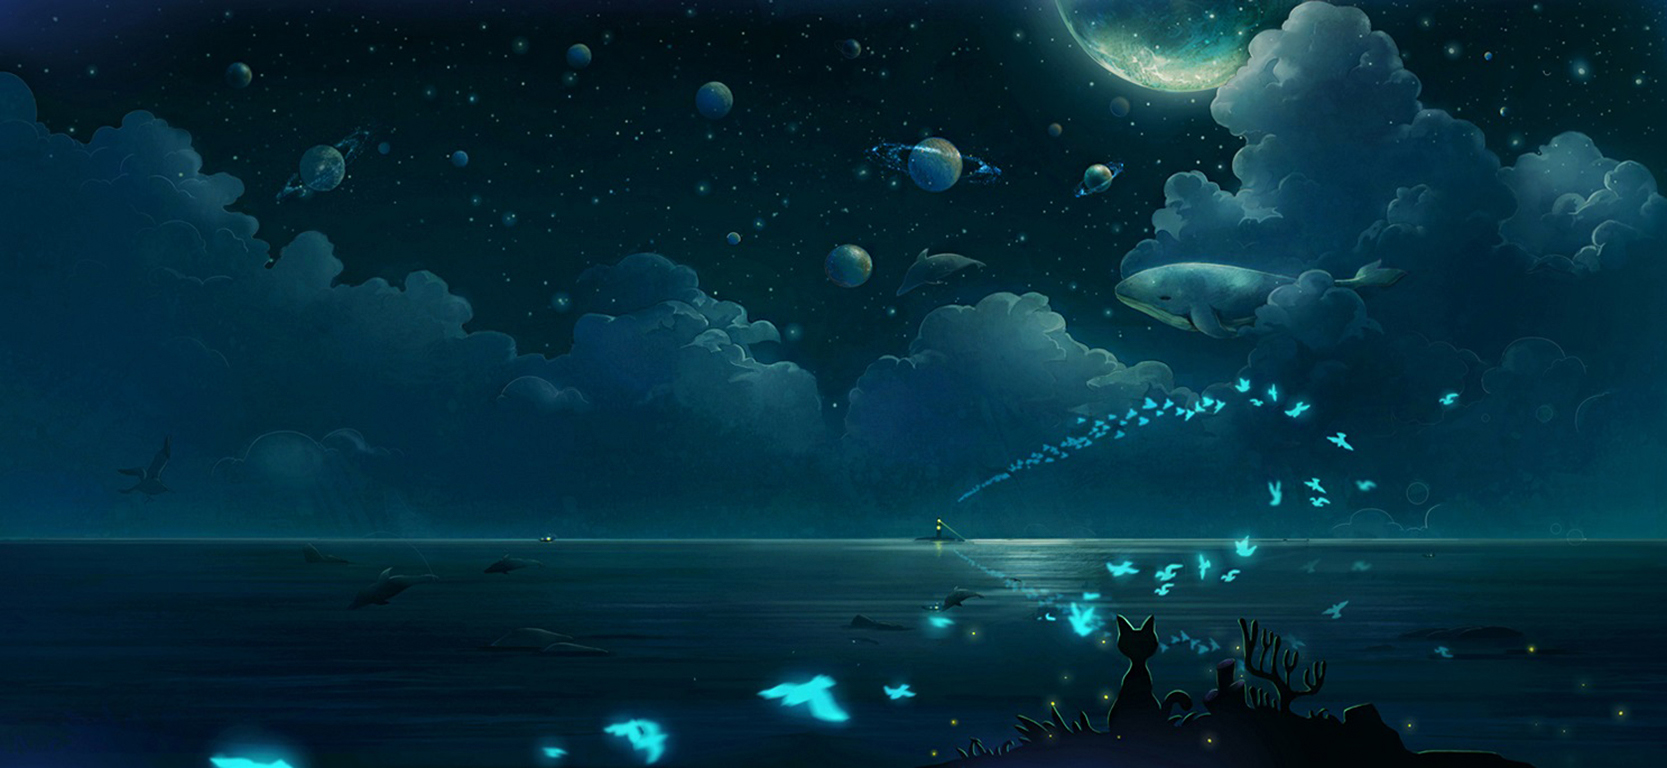 moon, star, landscape, fish, cloud, cat, whale, planet, night, bird, sky, ocean, anime 2160p